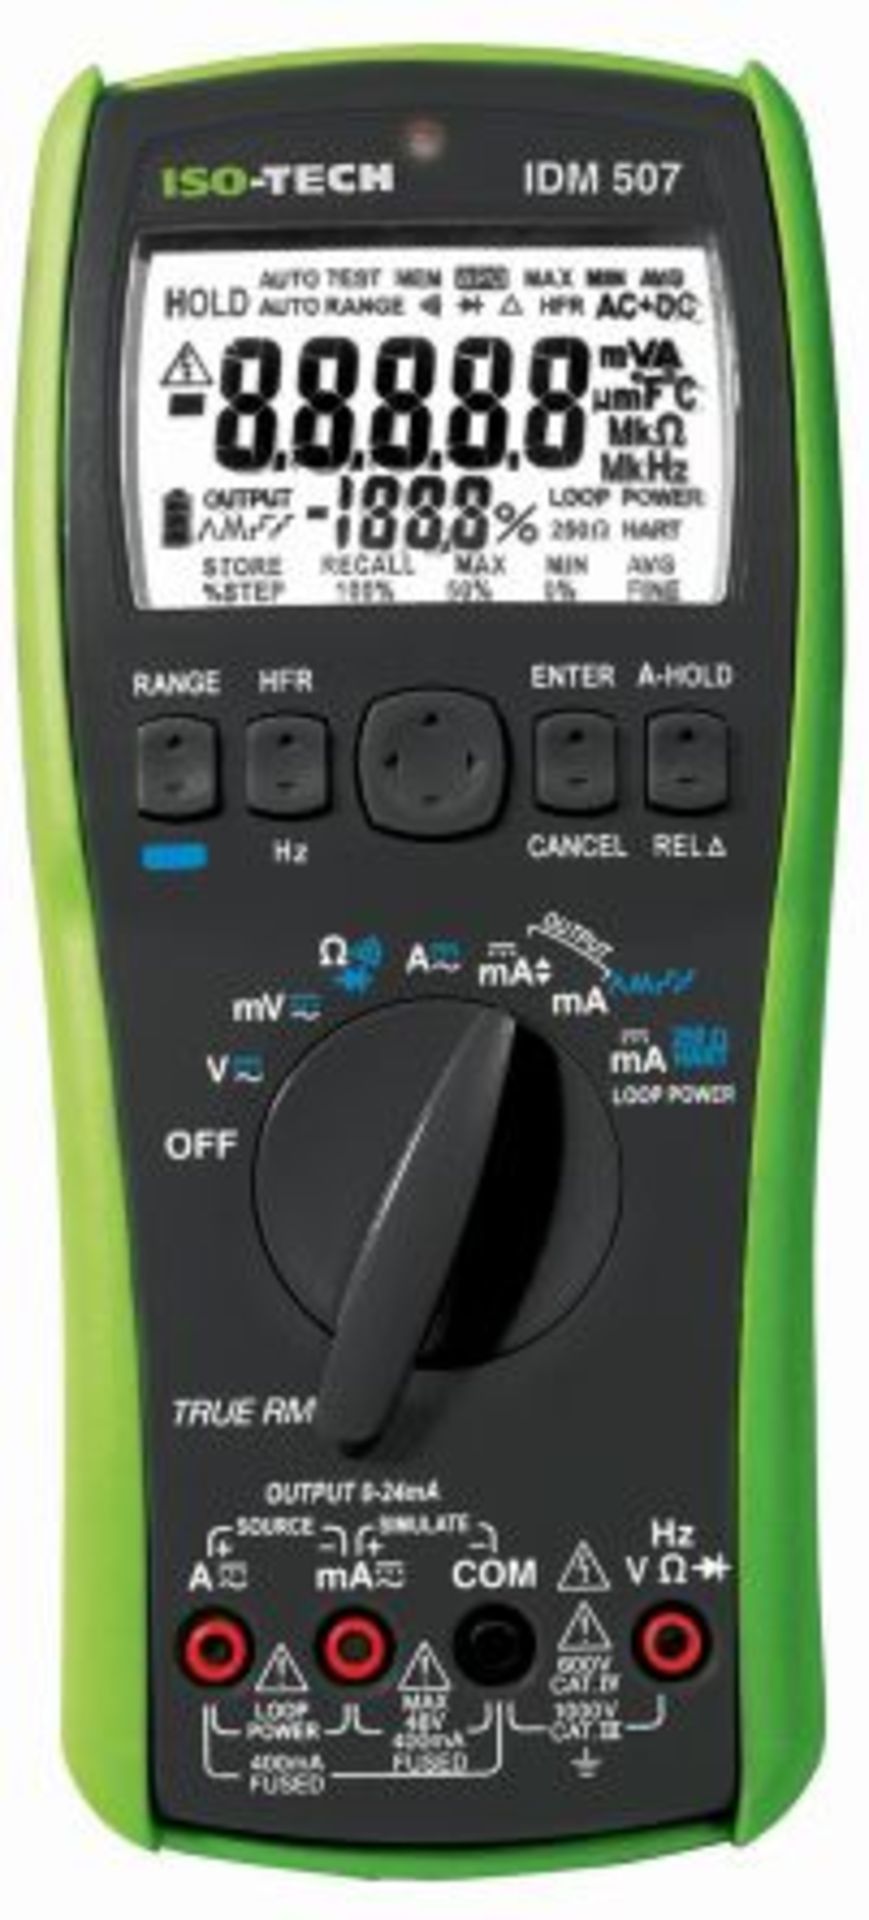 ISO-TECH IDM507 Handheld Digital Multimeter, 1A ac 1000V ac 1A dc 1000V dc